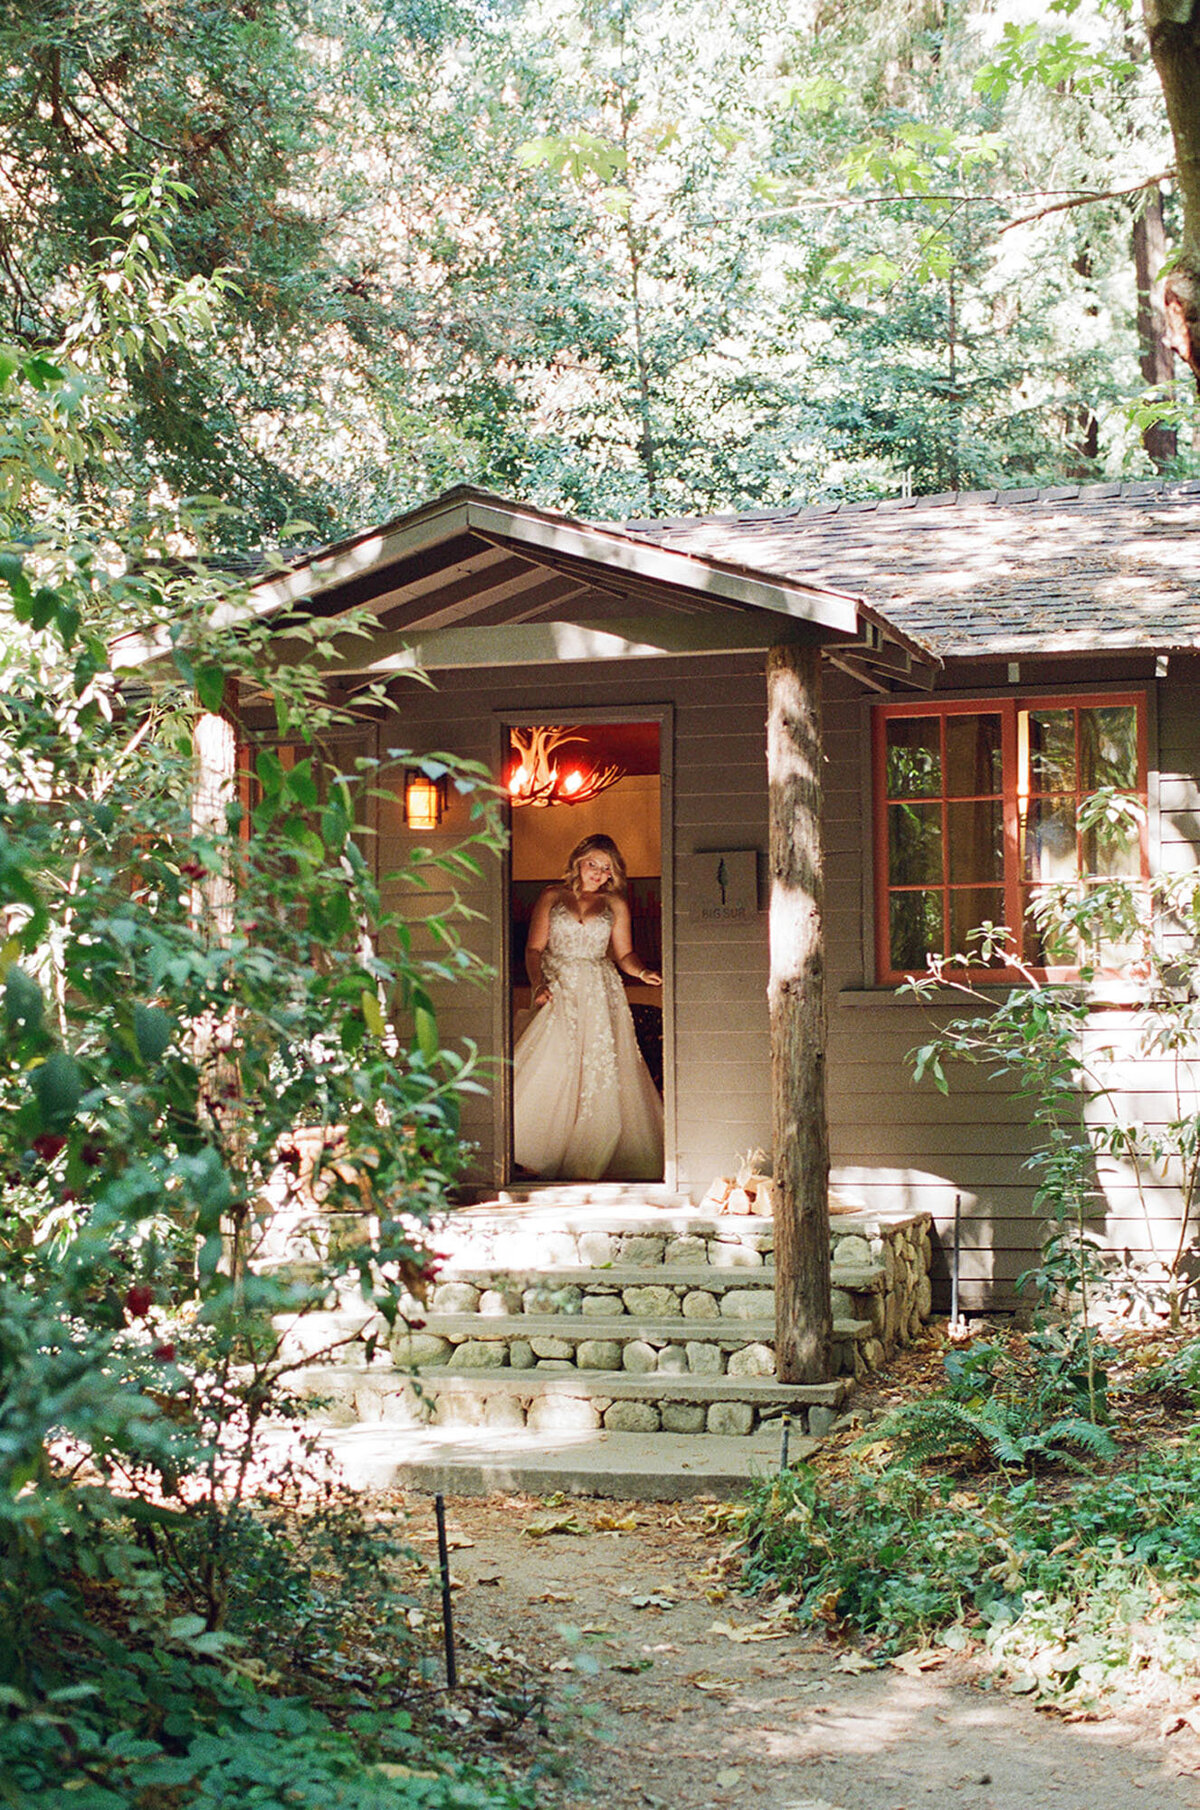 Glen-Oaks-Big-Sur-Roadhouse-Fall-Wedding-Wes-Anderson-Camp-13